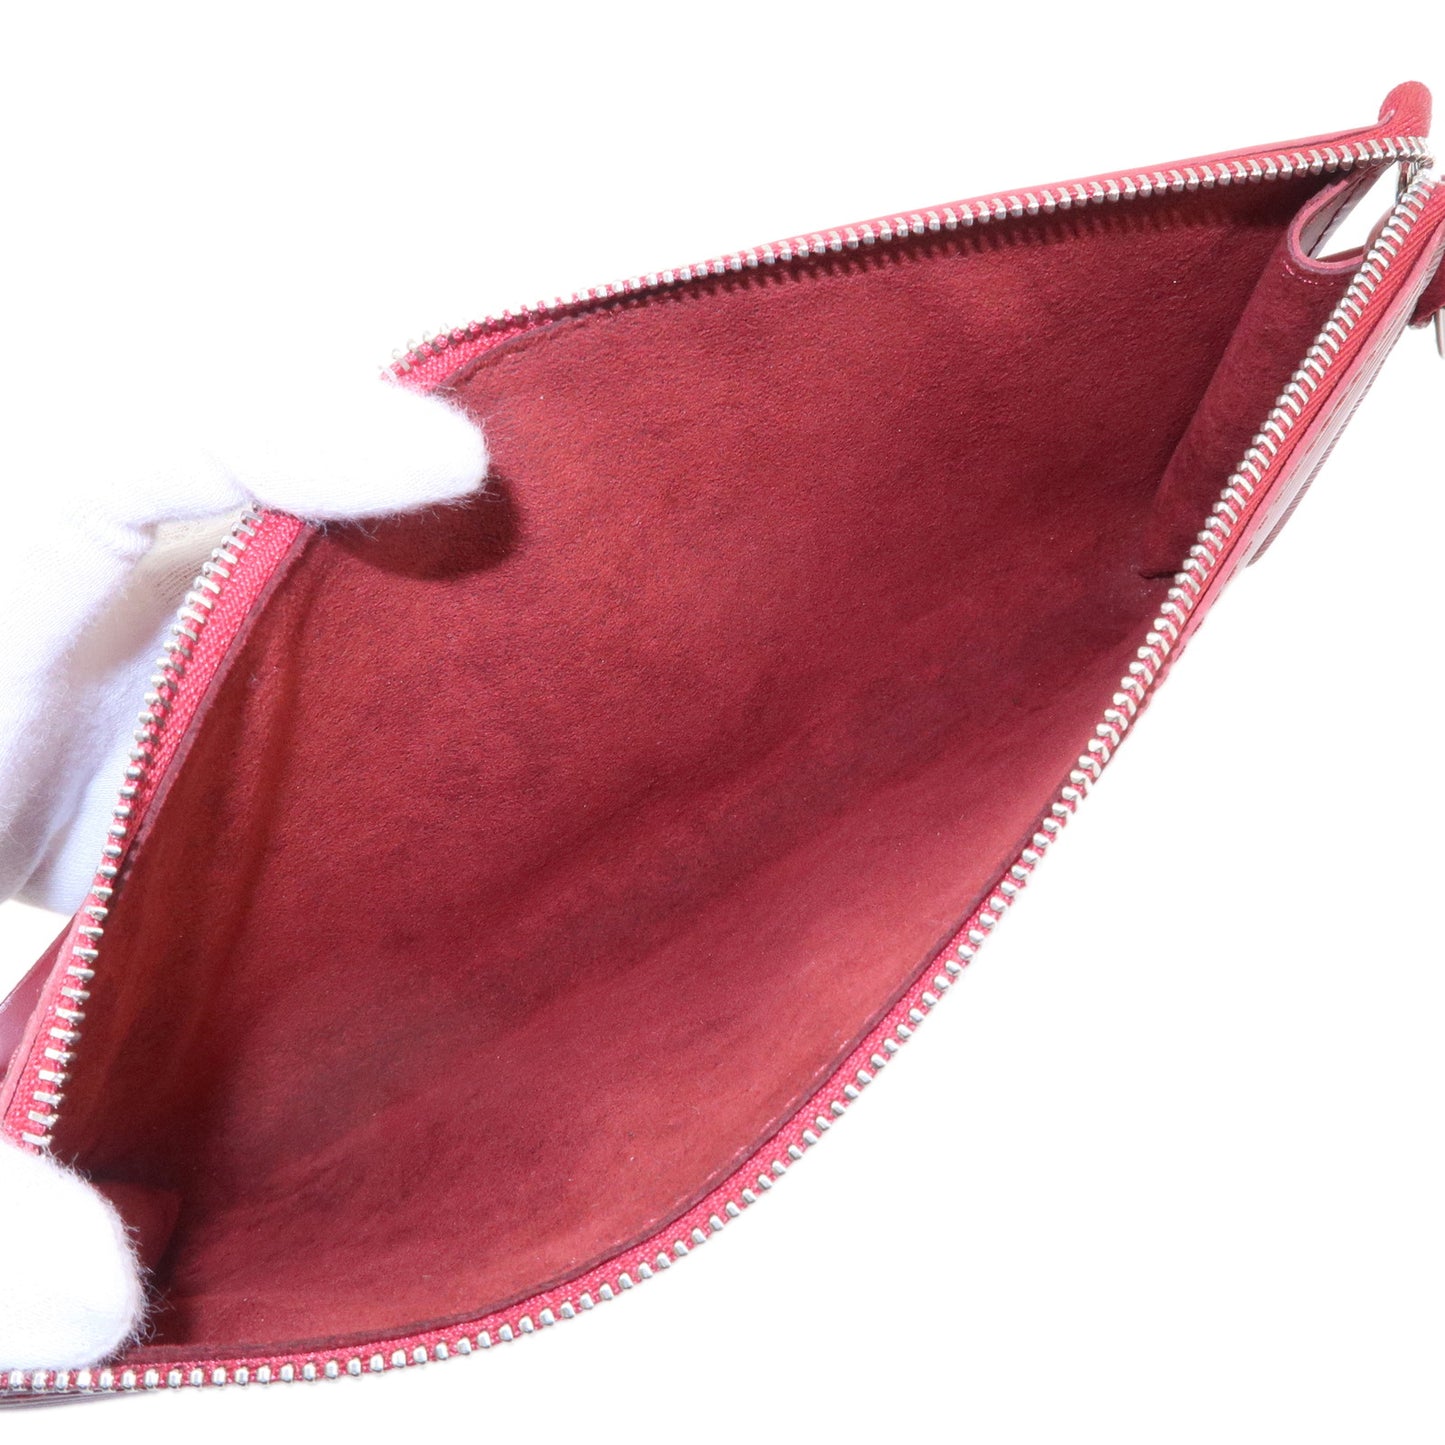 Bags by Louis Vuitton: Ruby Tube Handbag by Louis Vuitton